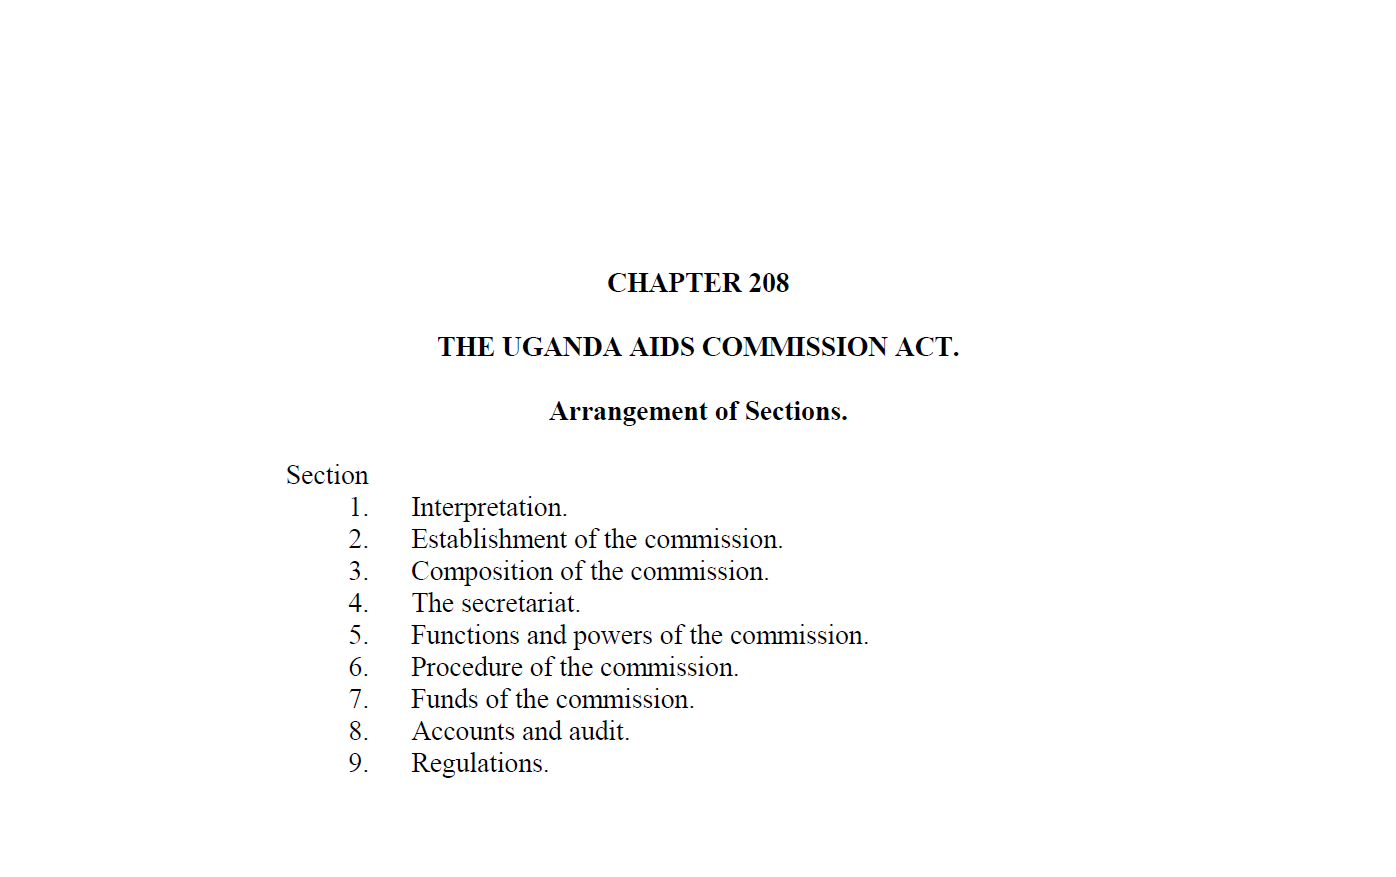 THE UGANDA AIDS COMMISSION ACT.